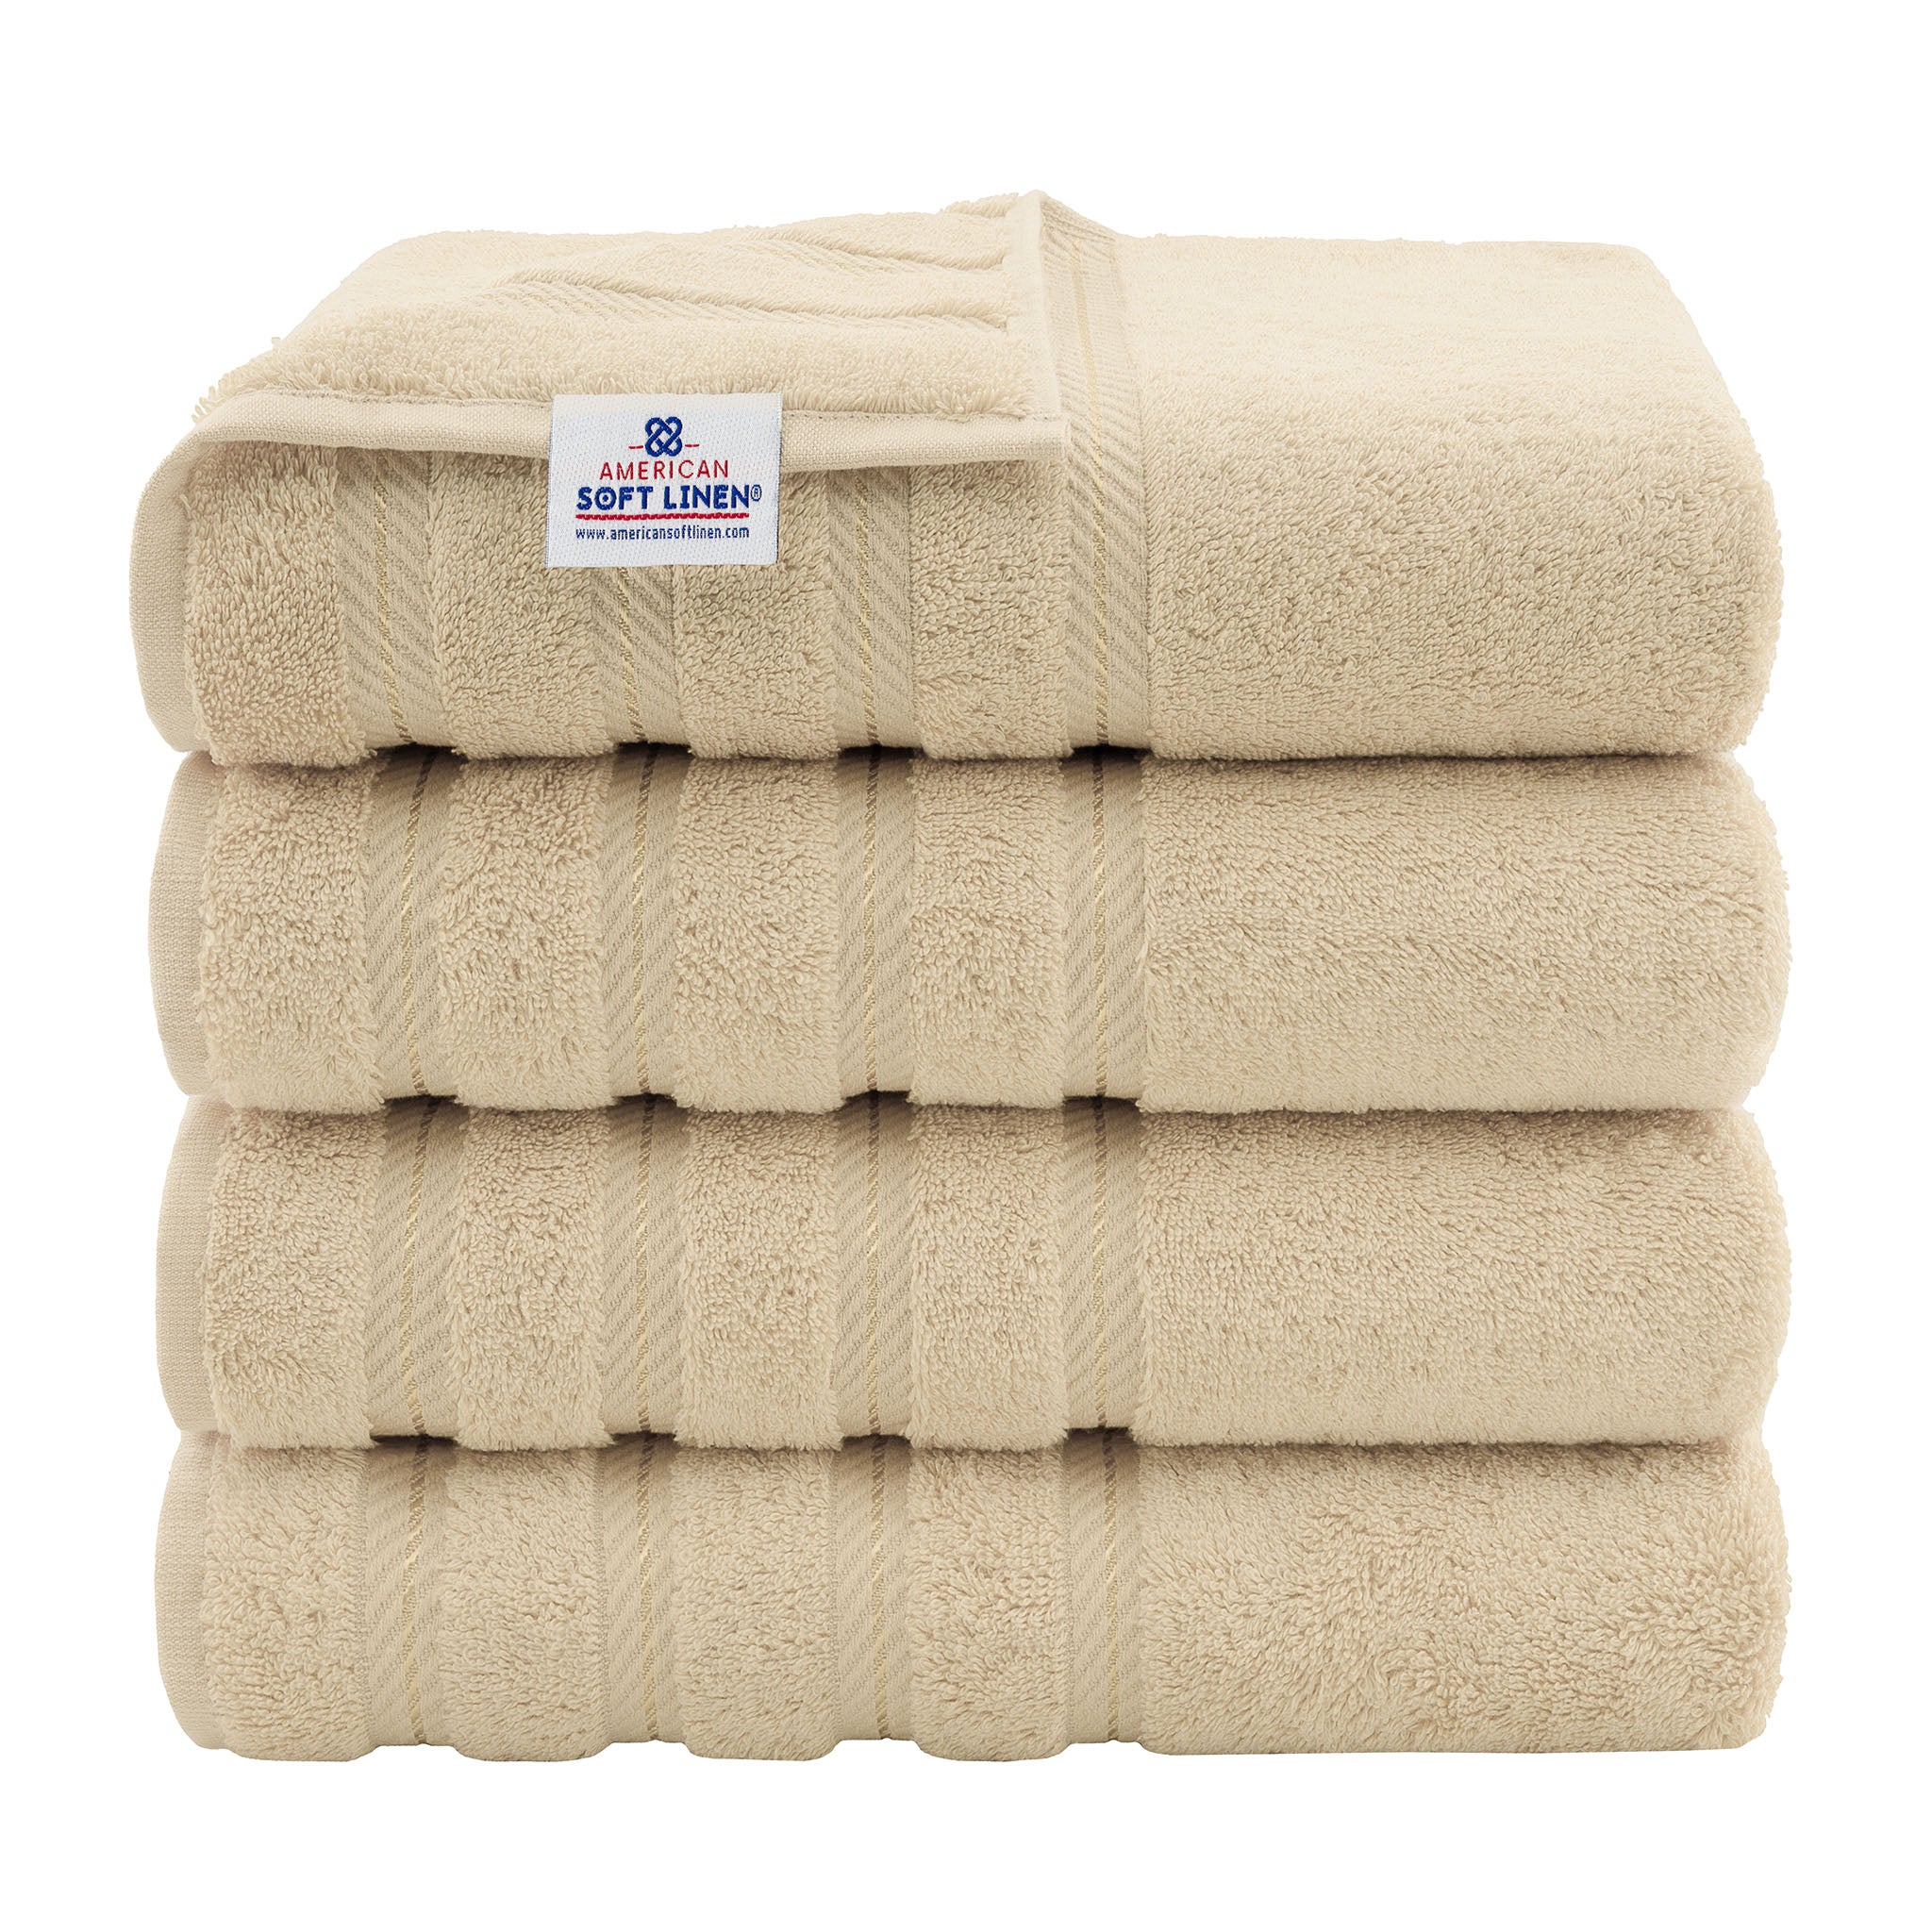 American Soft Linen 100% Turkish Cotton 4 Pack Bath Towel Set Wholesale sand-taupe-1